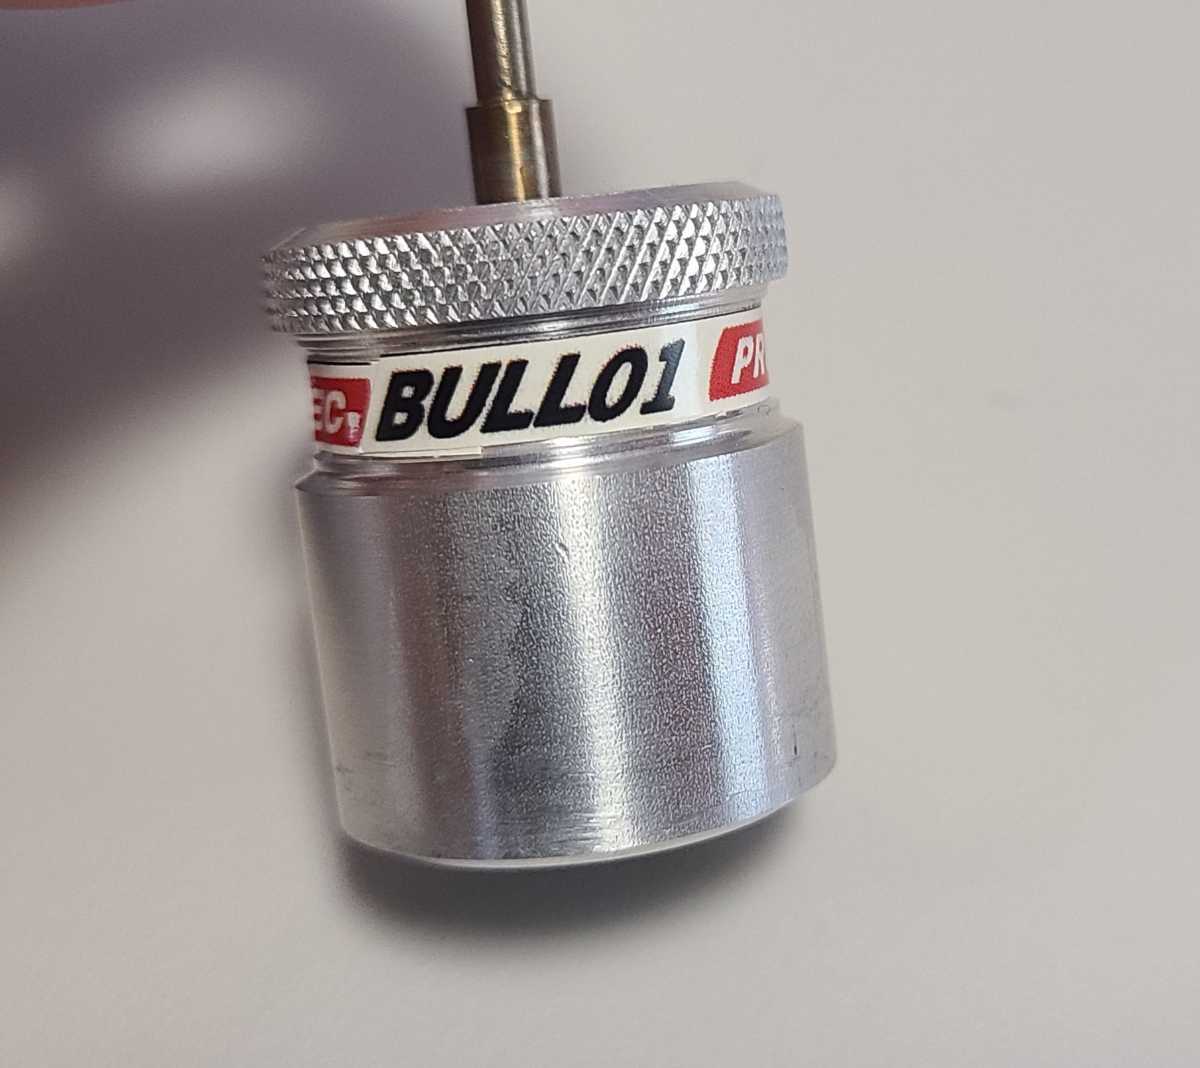  Pro Tec LAB BULL-01 PROTECbru01labo машина кондиционер для холодный .HFC134a сервис жестяная банка .